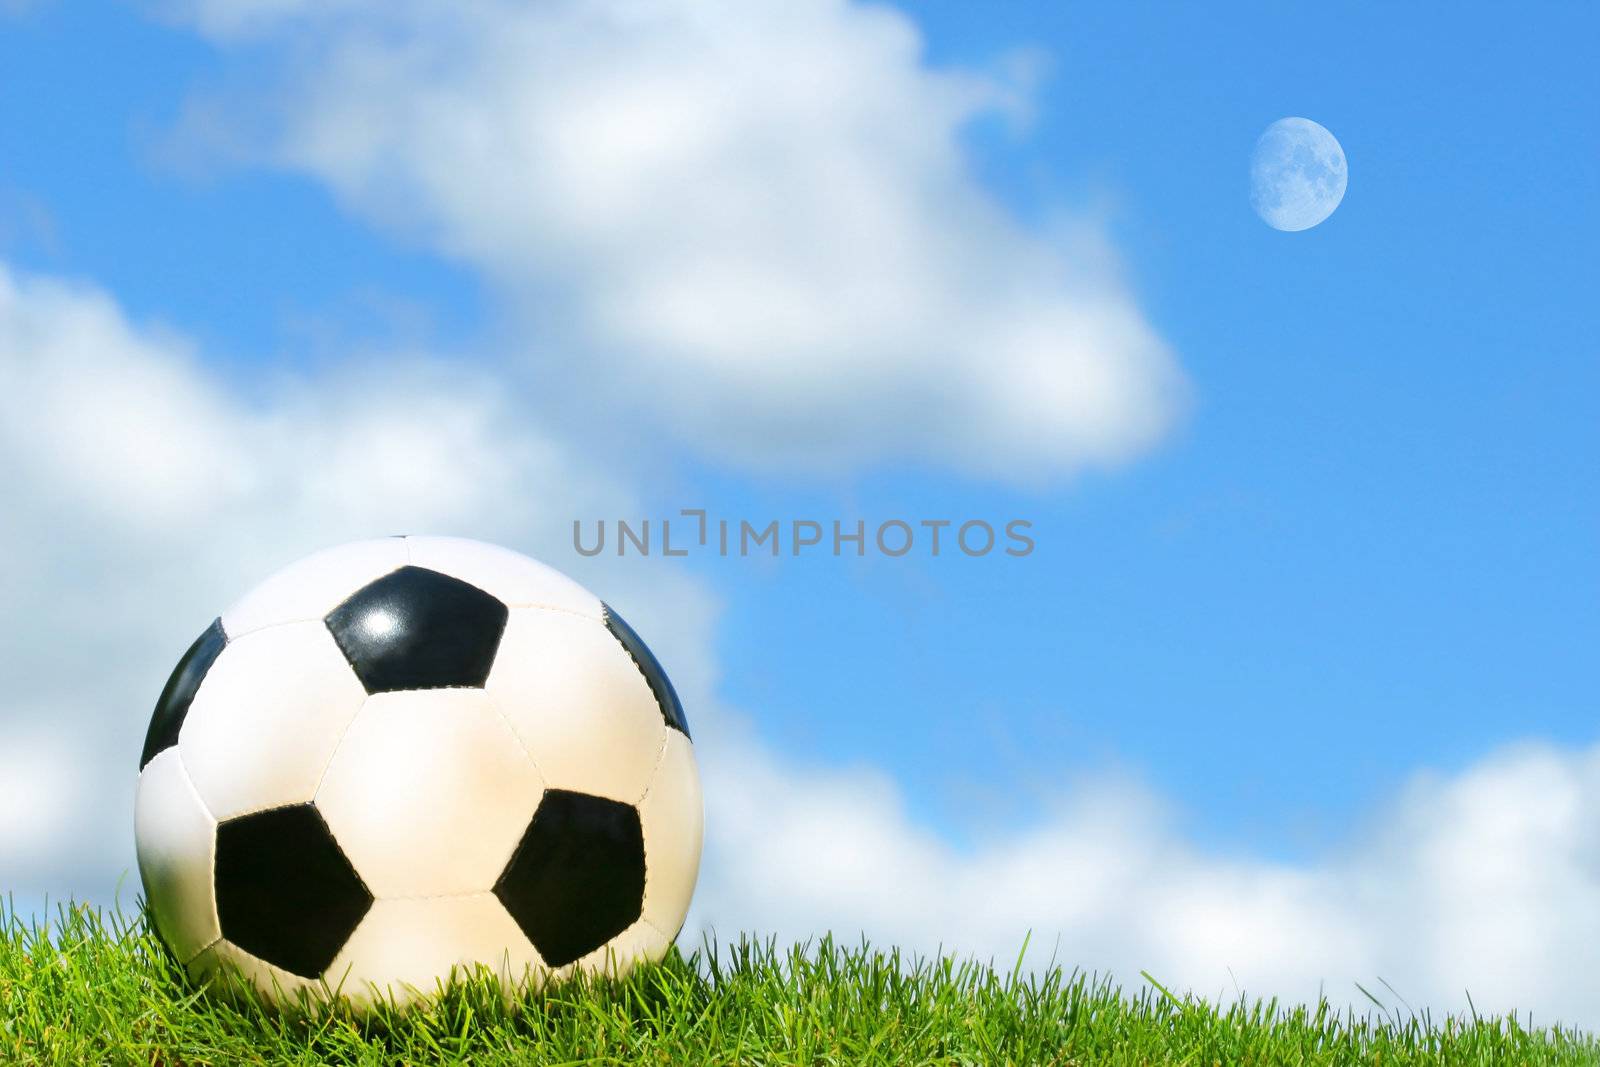 Soccerball against a blue sky by Sandralise